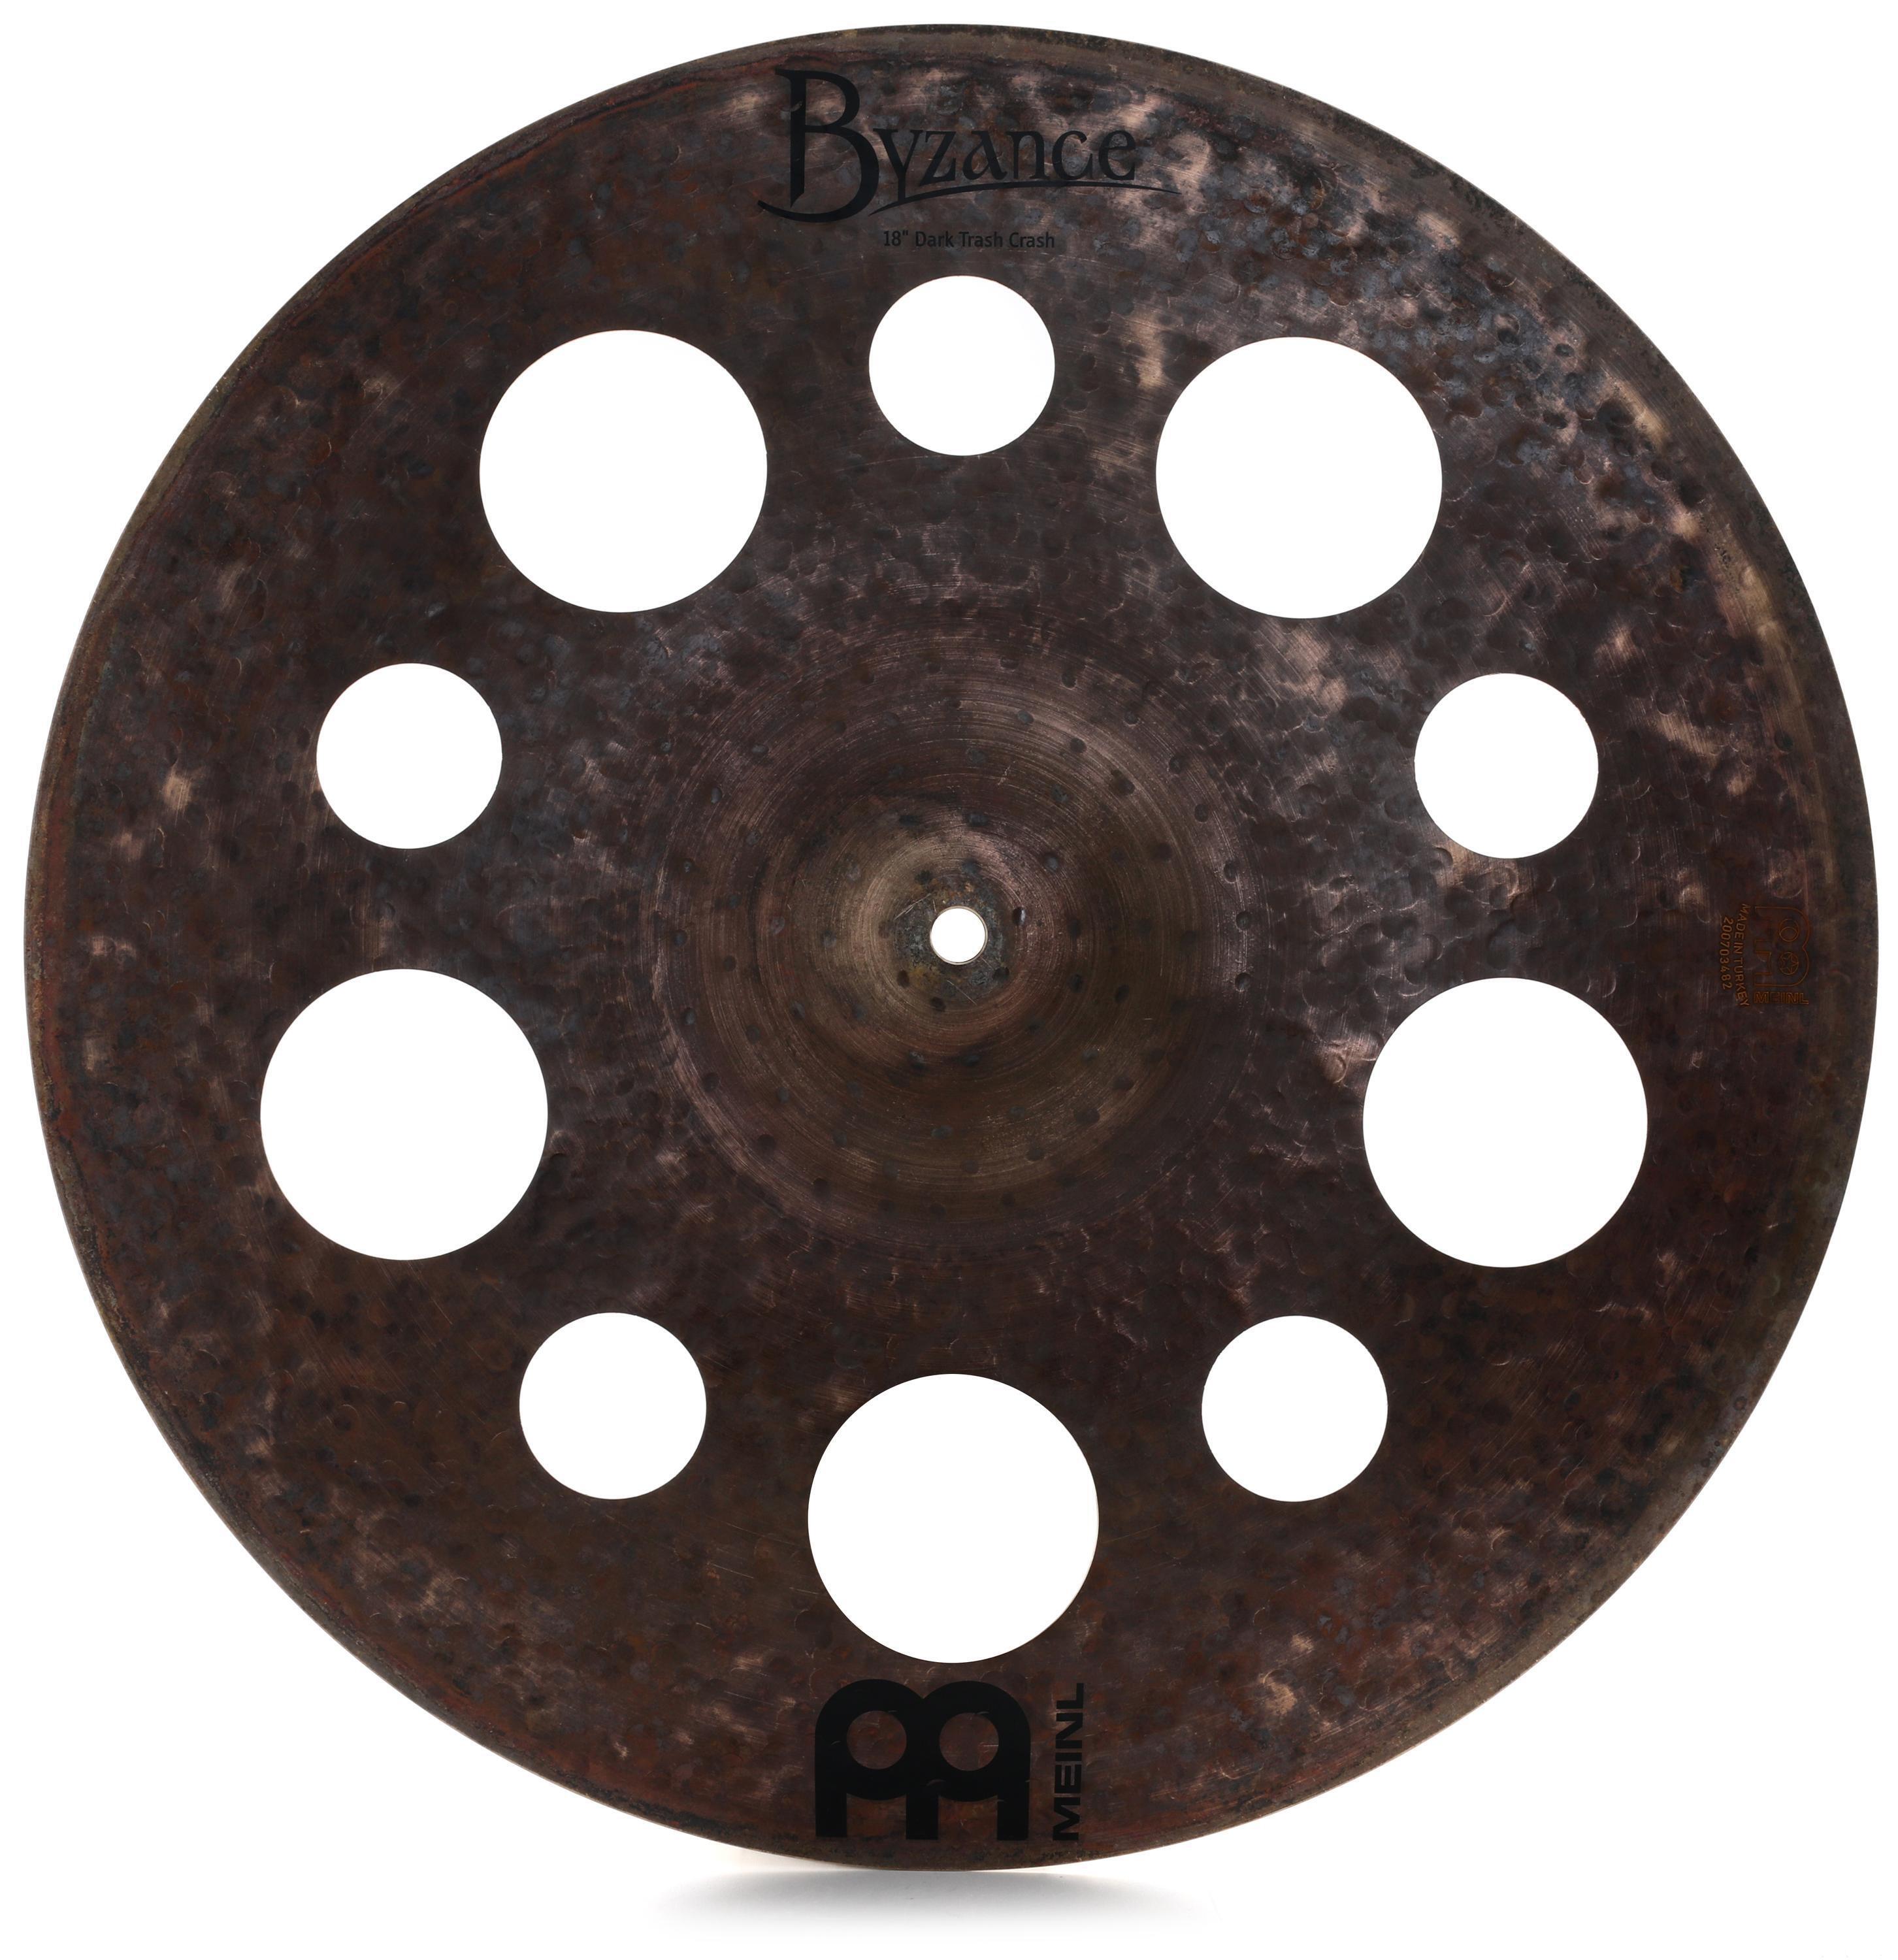 Meinl Cymbals Byzance Dark Trash Crash Cymbal - 18-inch | Sweetwater